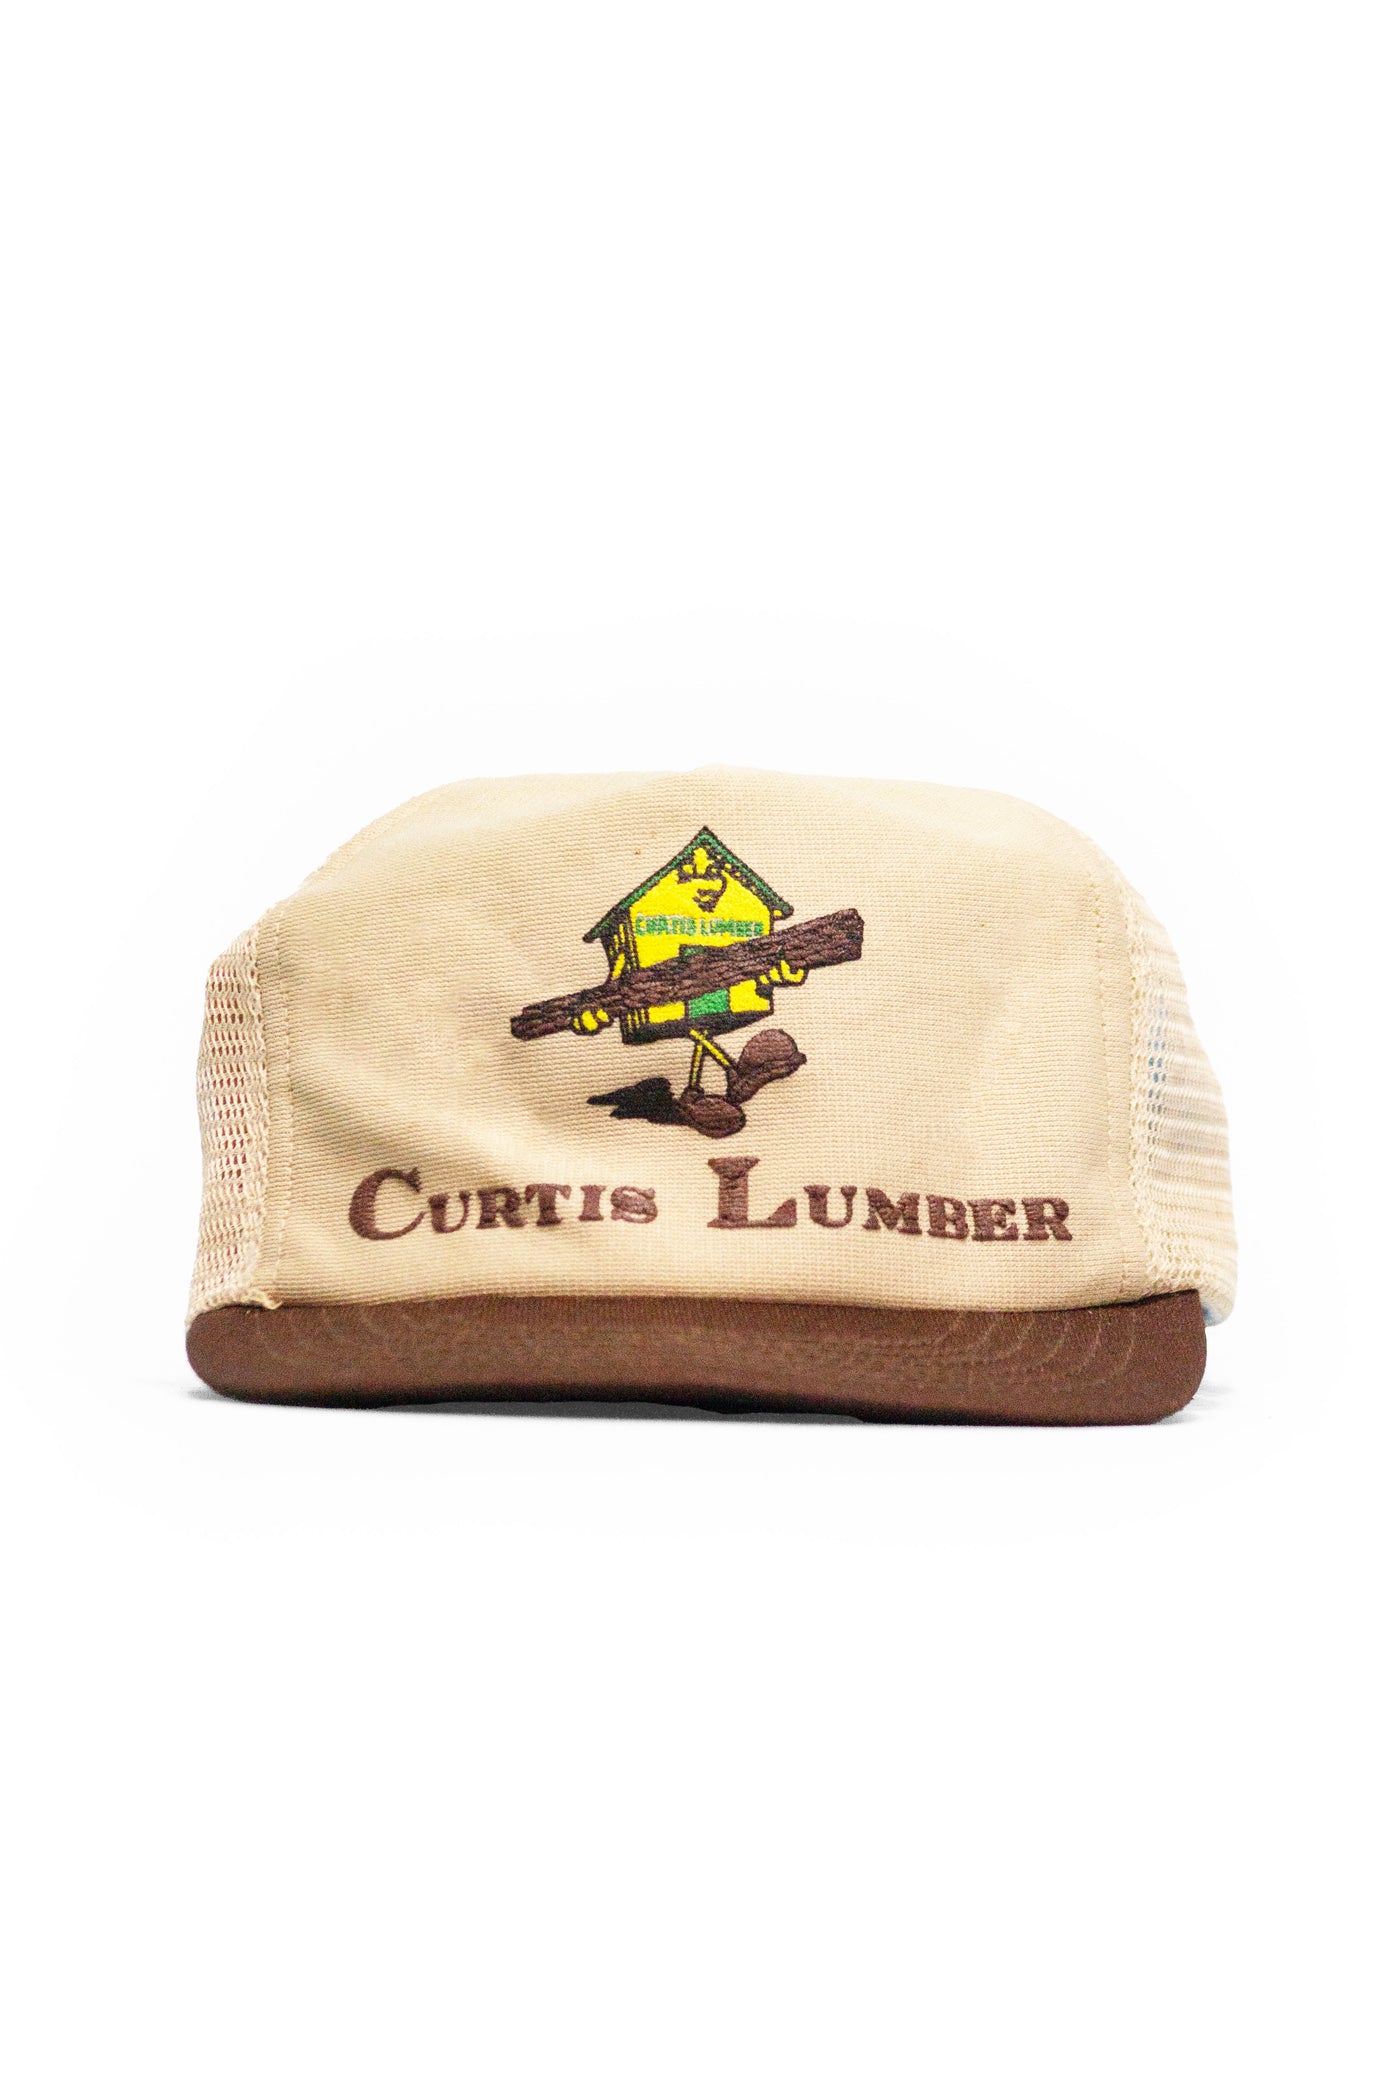 Vintage Curtis Lumber Puff Print Trucker Hat